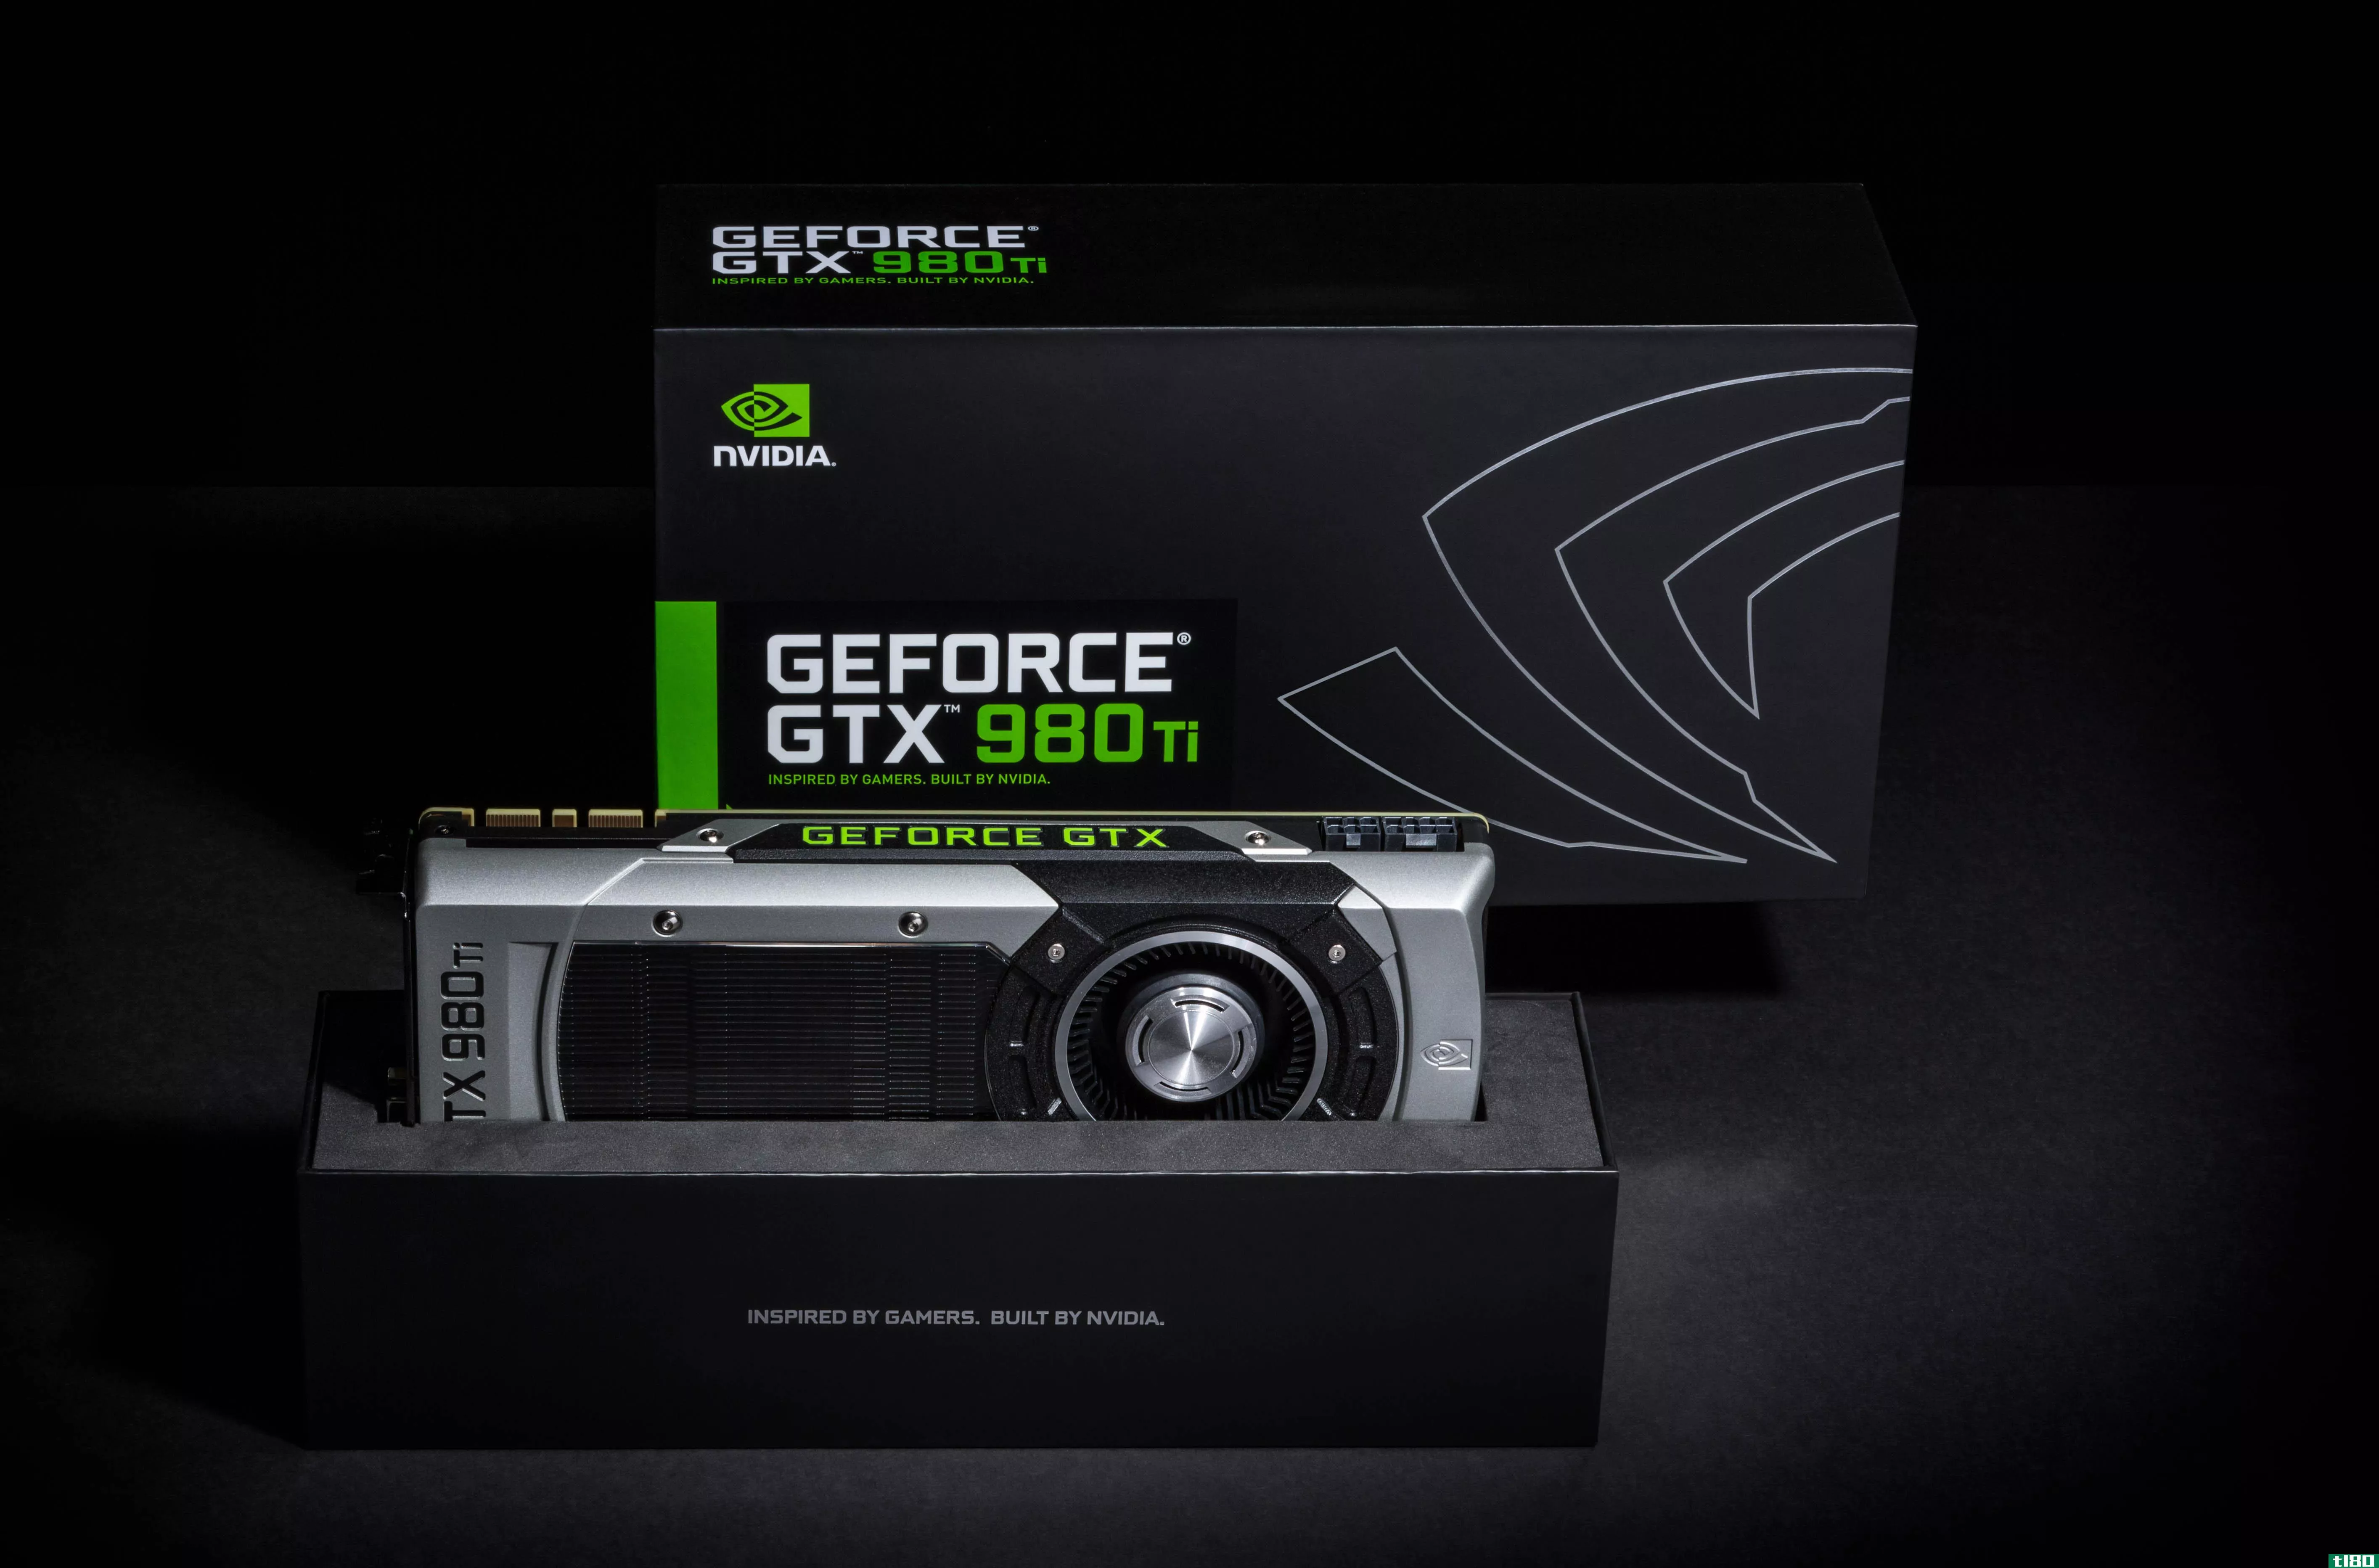 nvidia的新旗舰GTX980TI卡是所有关于4k和vr游戏